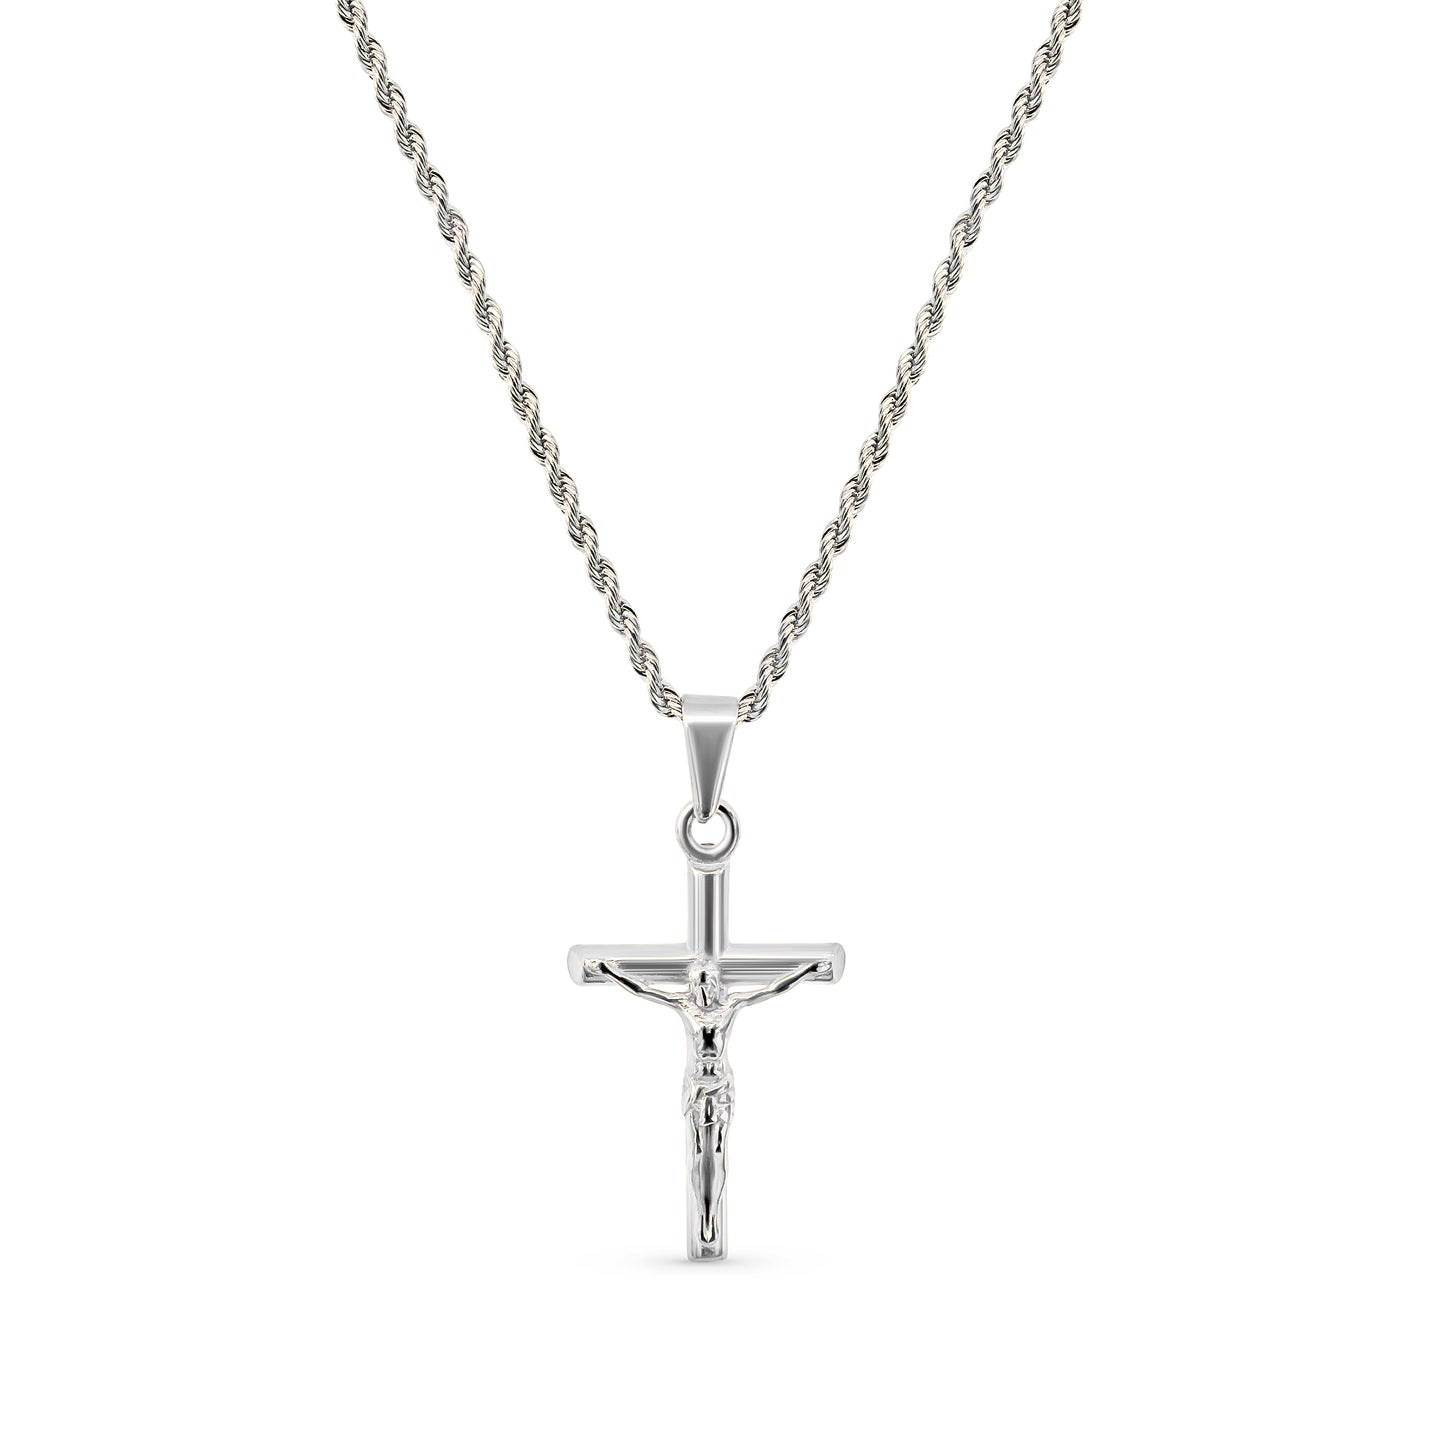 Crucifix Pendant - Silver